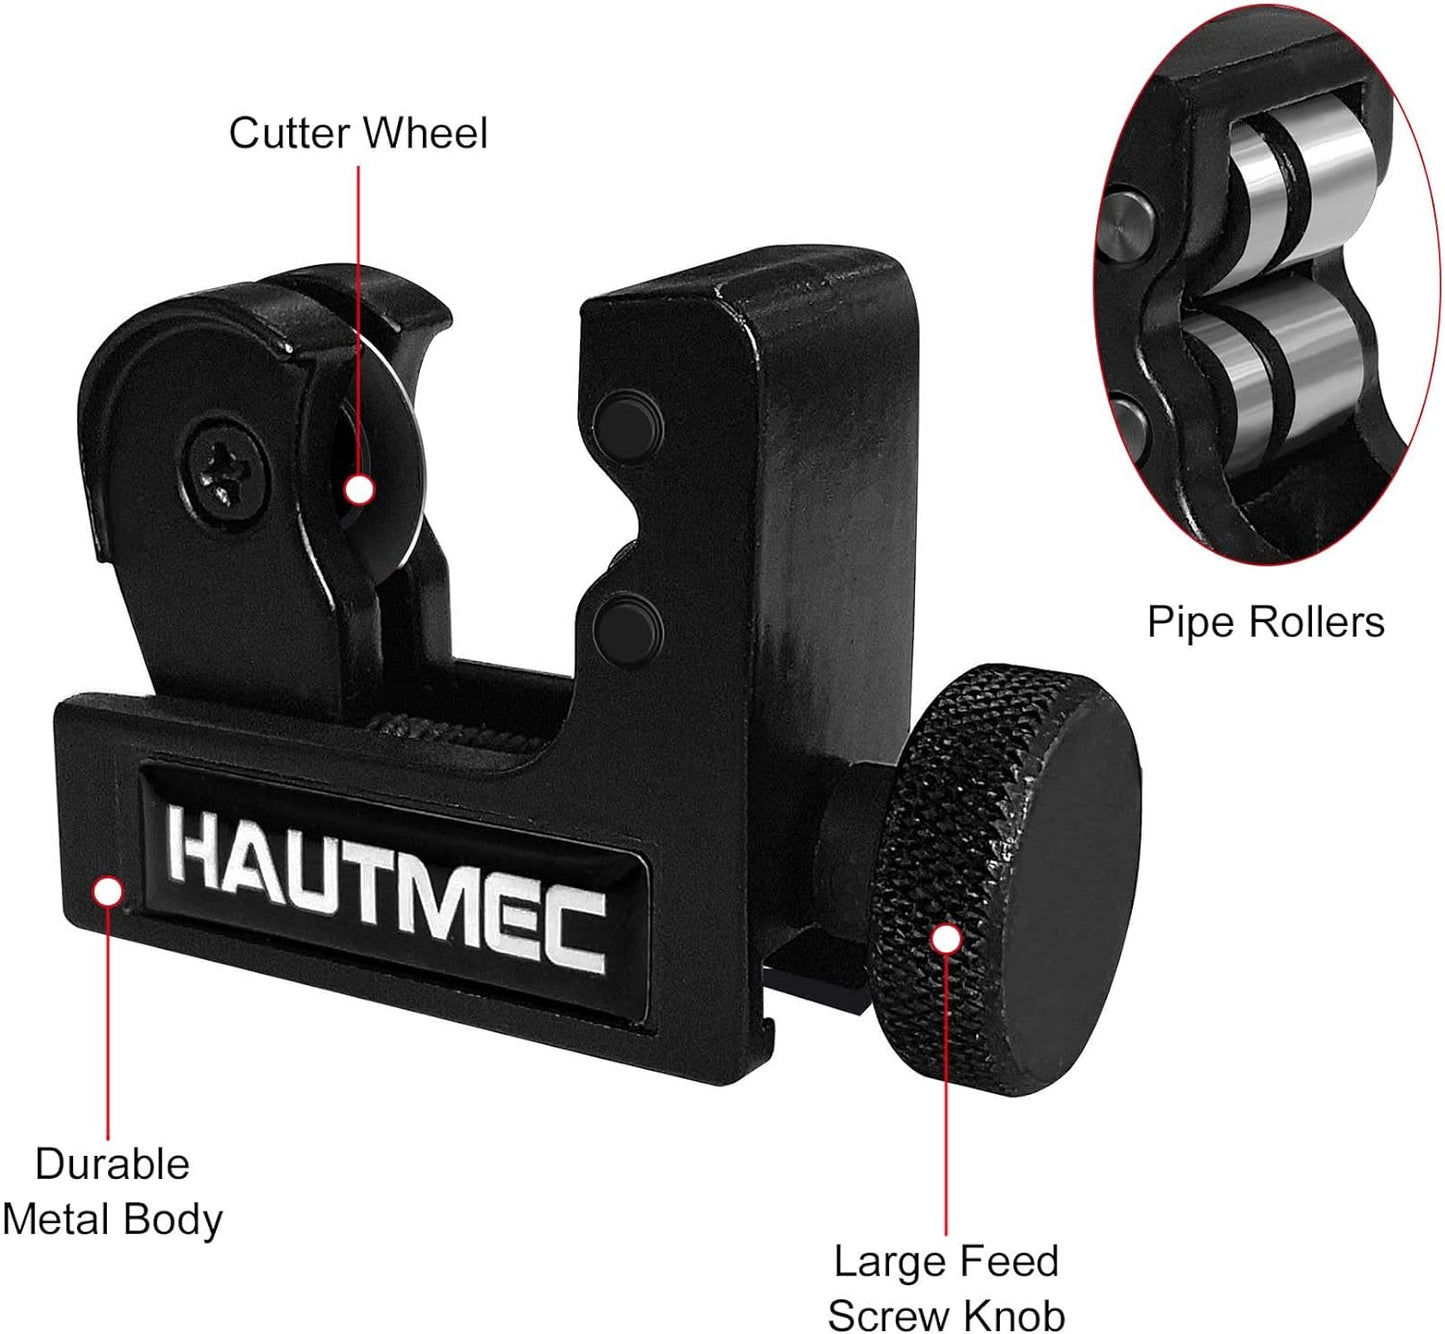 HAUTMEC Heavy Duty Adjustable Mini Tube Cutter Of Dia. 3-22mm (1/8 Inch - 7/8 Inch) HT0132-TC